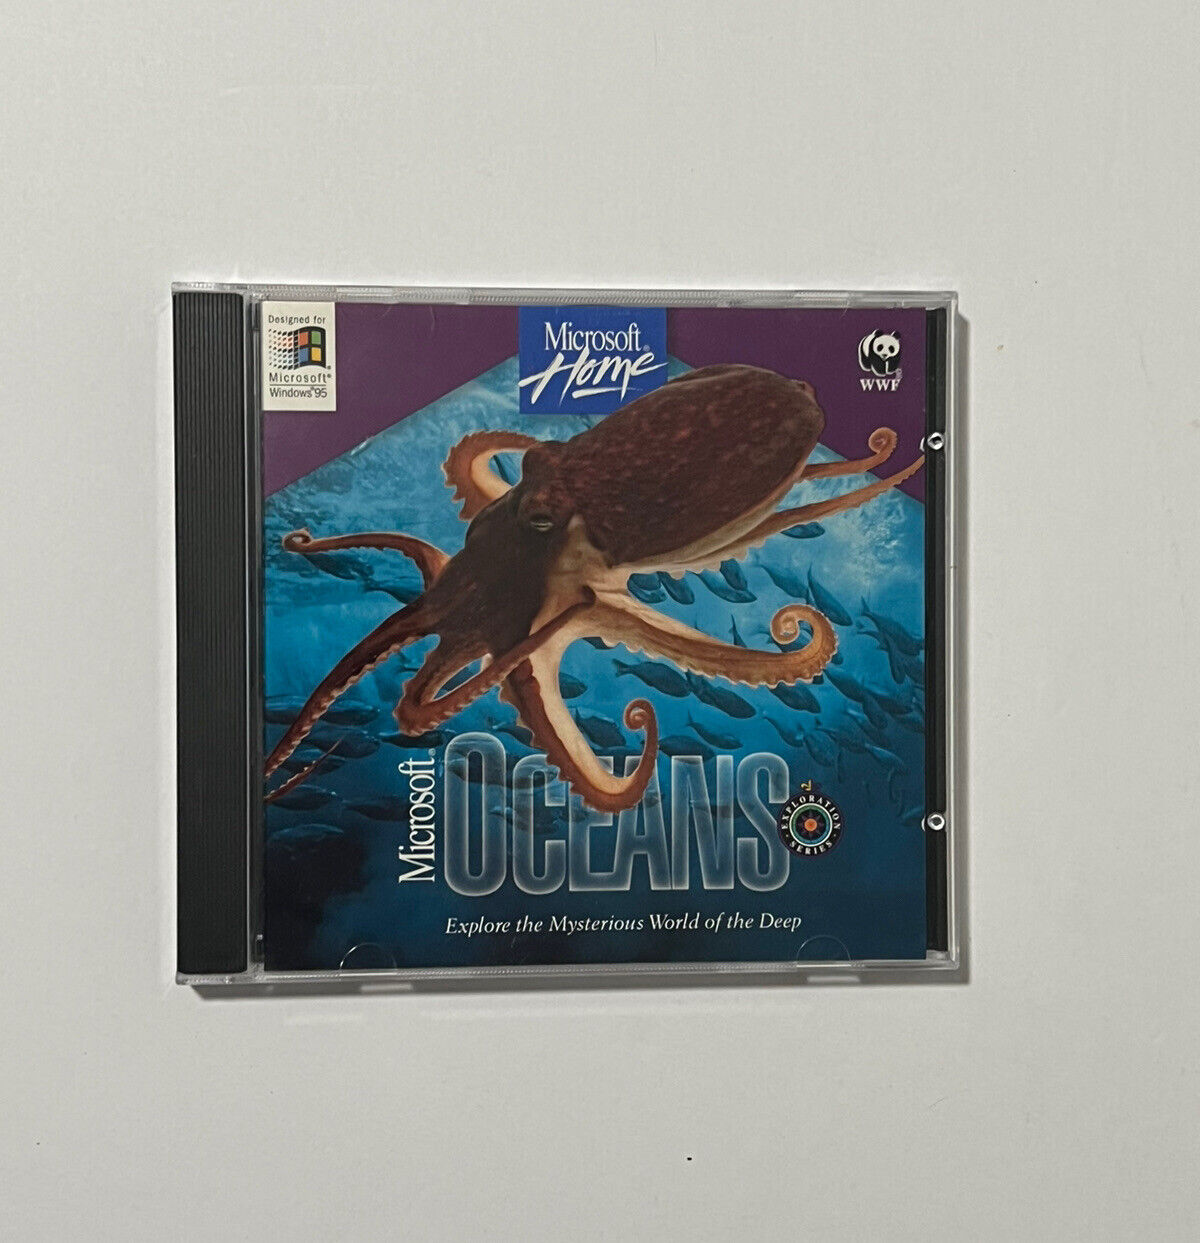 Microsoft Home OCEANS CD-Rom Software Windows 95 Exploration Series En 1995